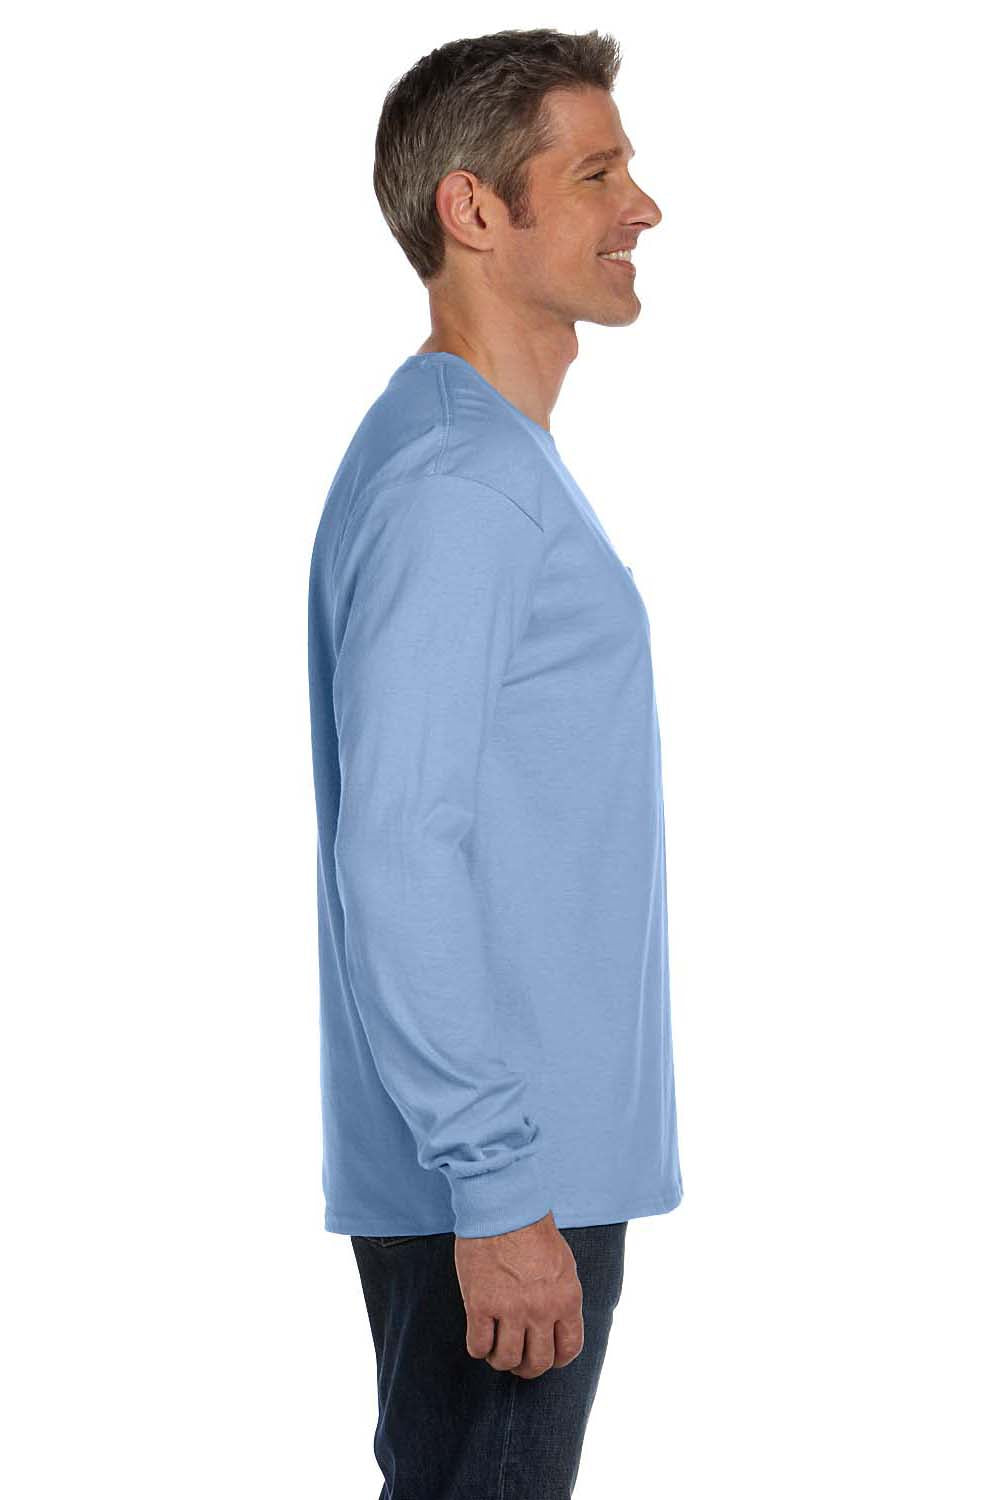 Hanes 5596 Mens ComfortSoft Long Sleeve Crewneck T-Shirt w/ Pocket Light Blue Side